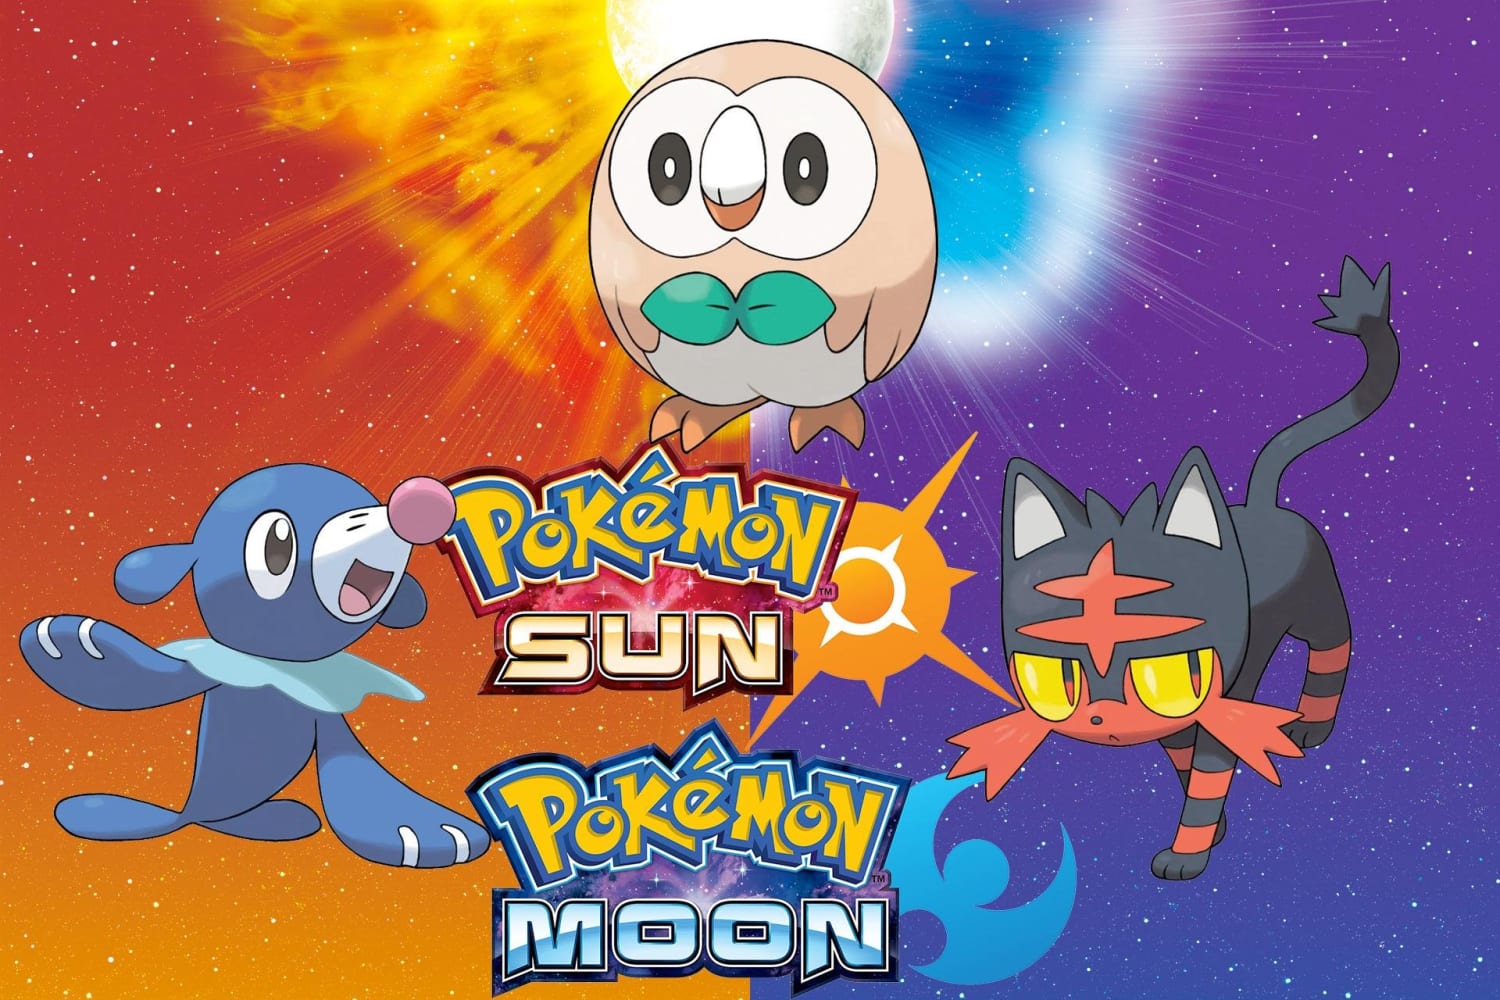 Pokemon Sun/Moon - lots of details and art for Team Skull, new Pokemon, Alola  Forms